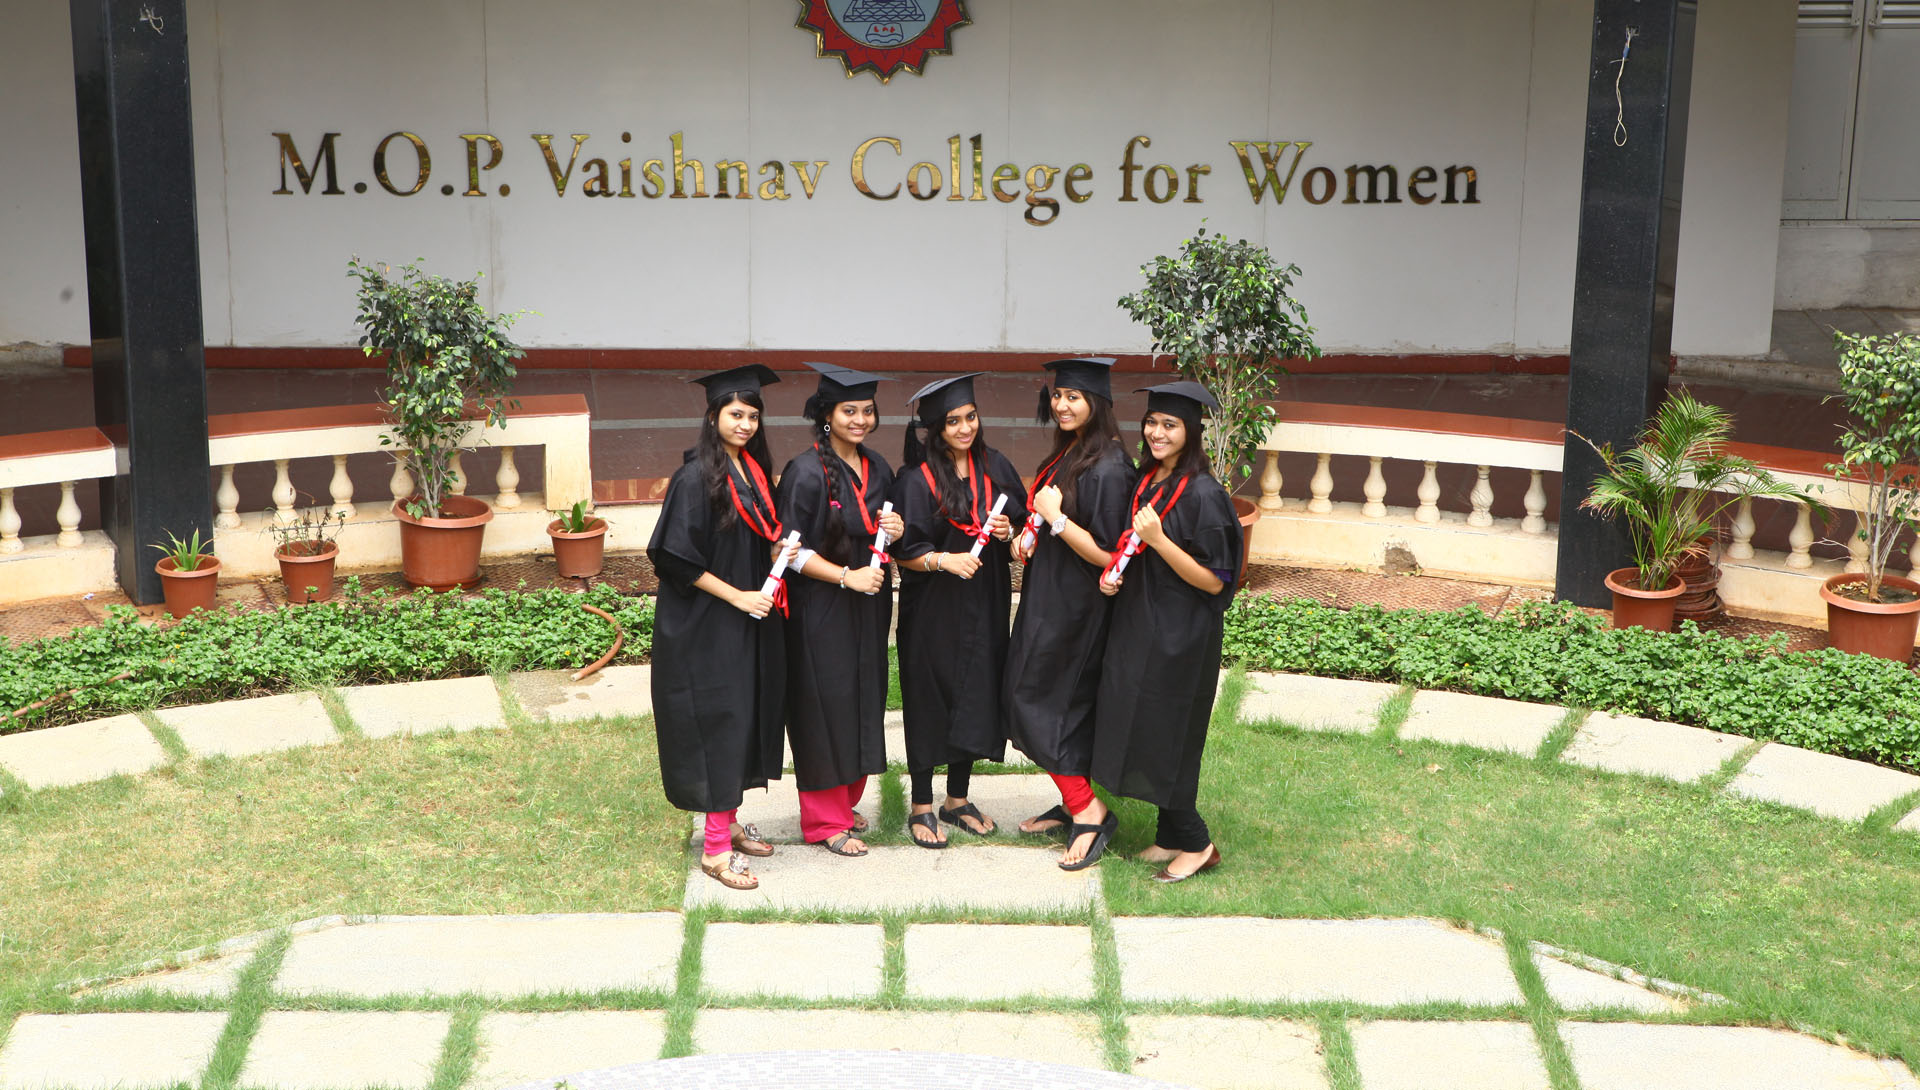 M.O.P. Vaishnav College (@mopvcfw) • Instagram photos and videos